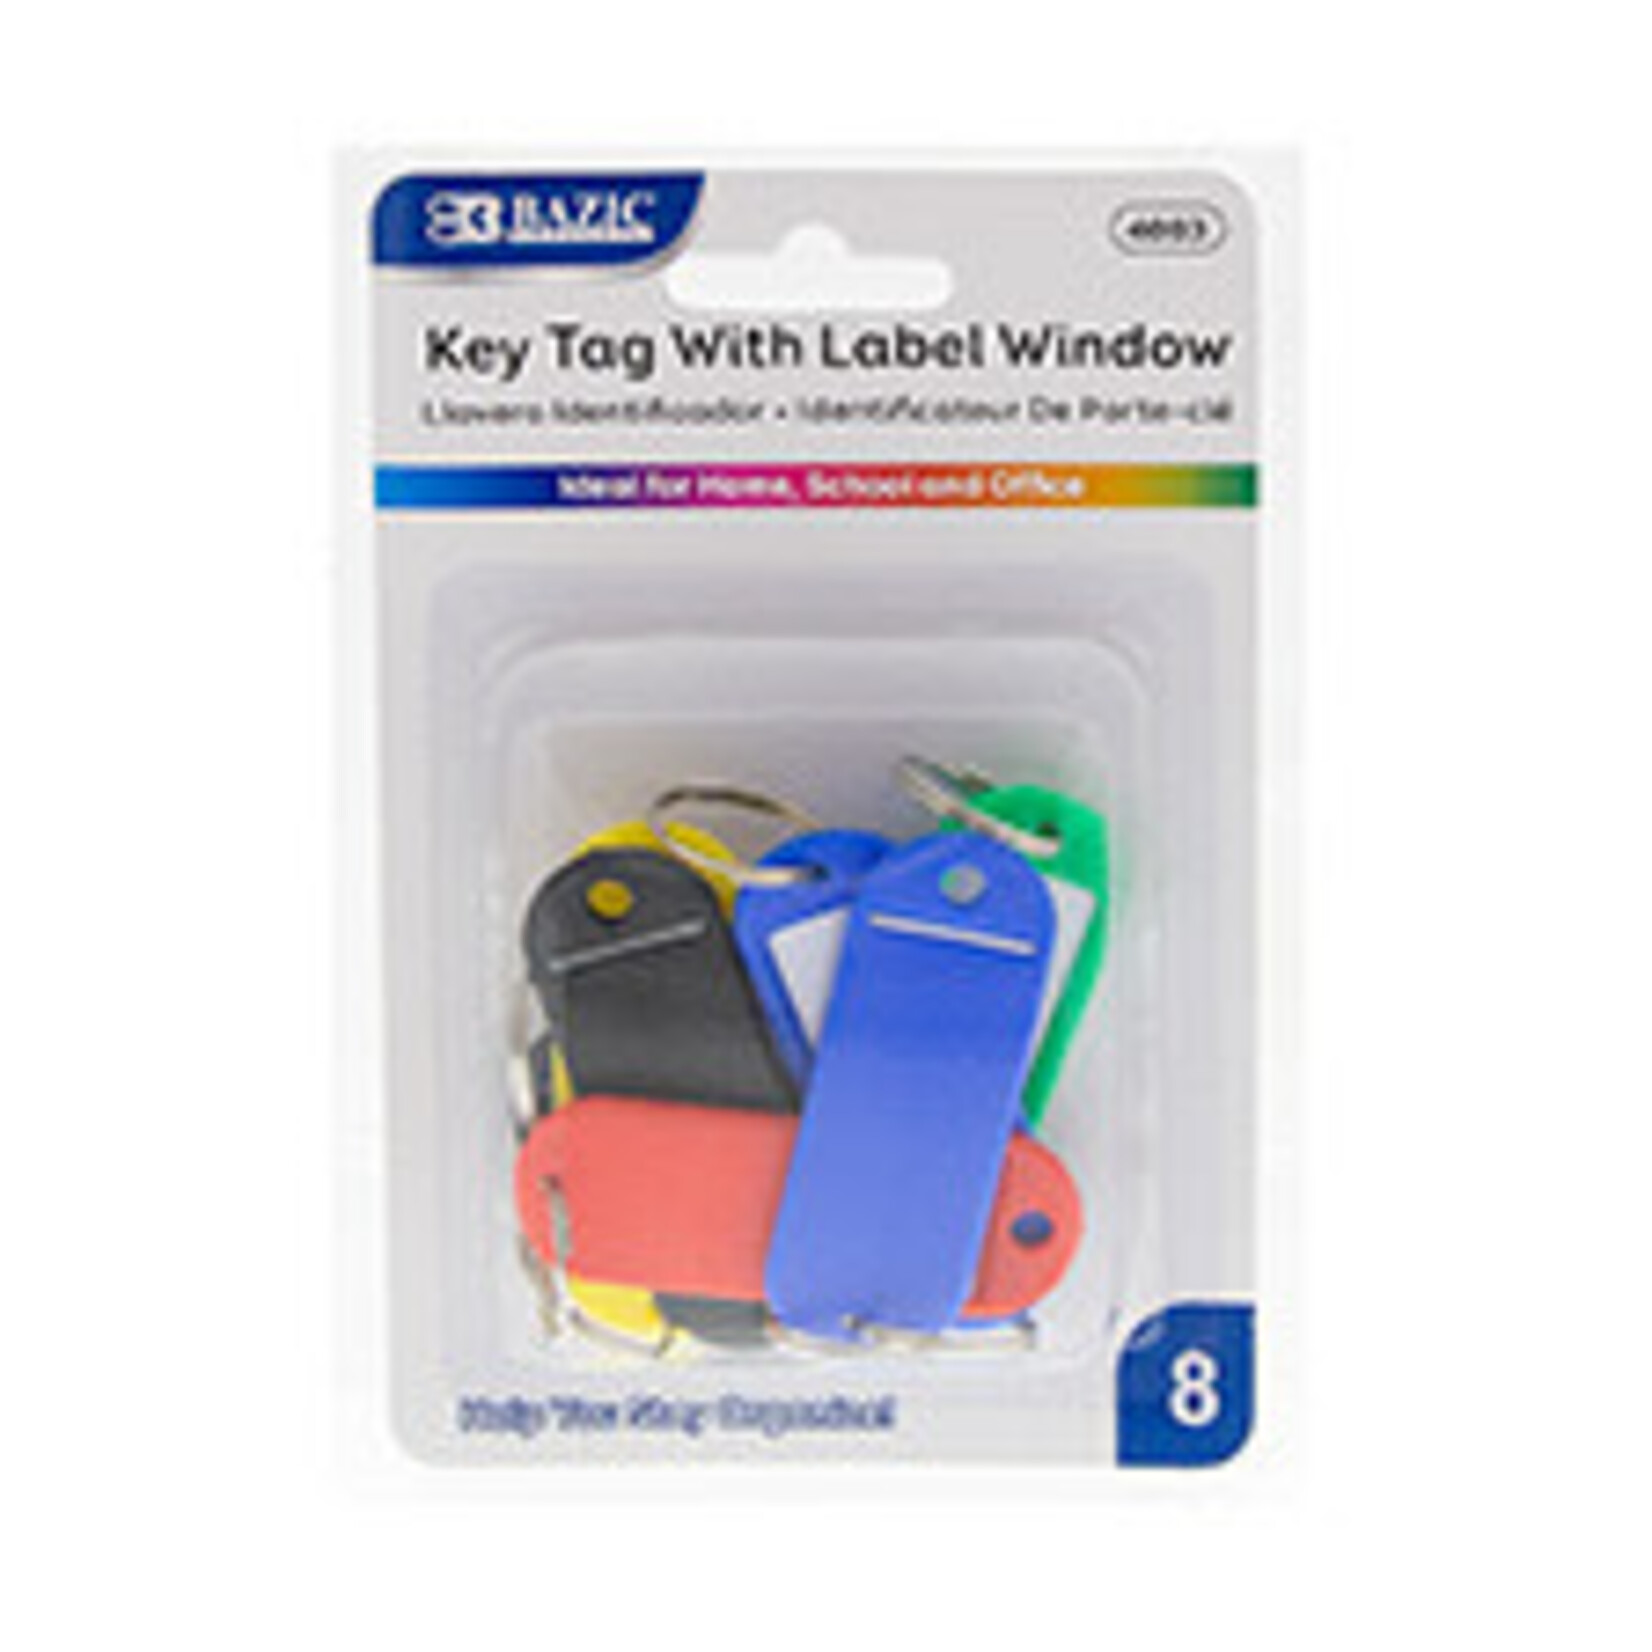 Key Tag with Label Window